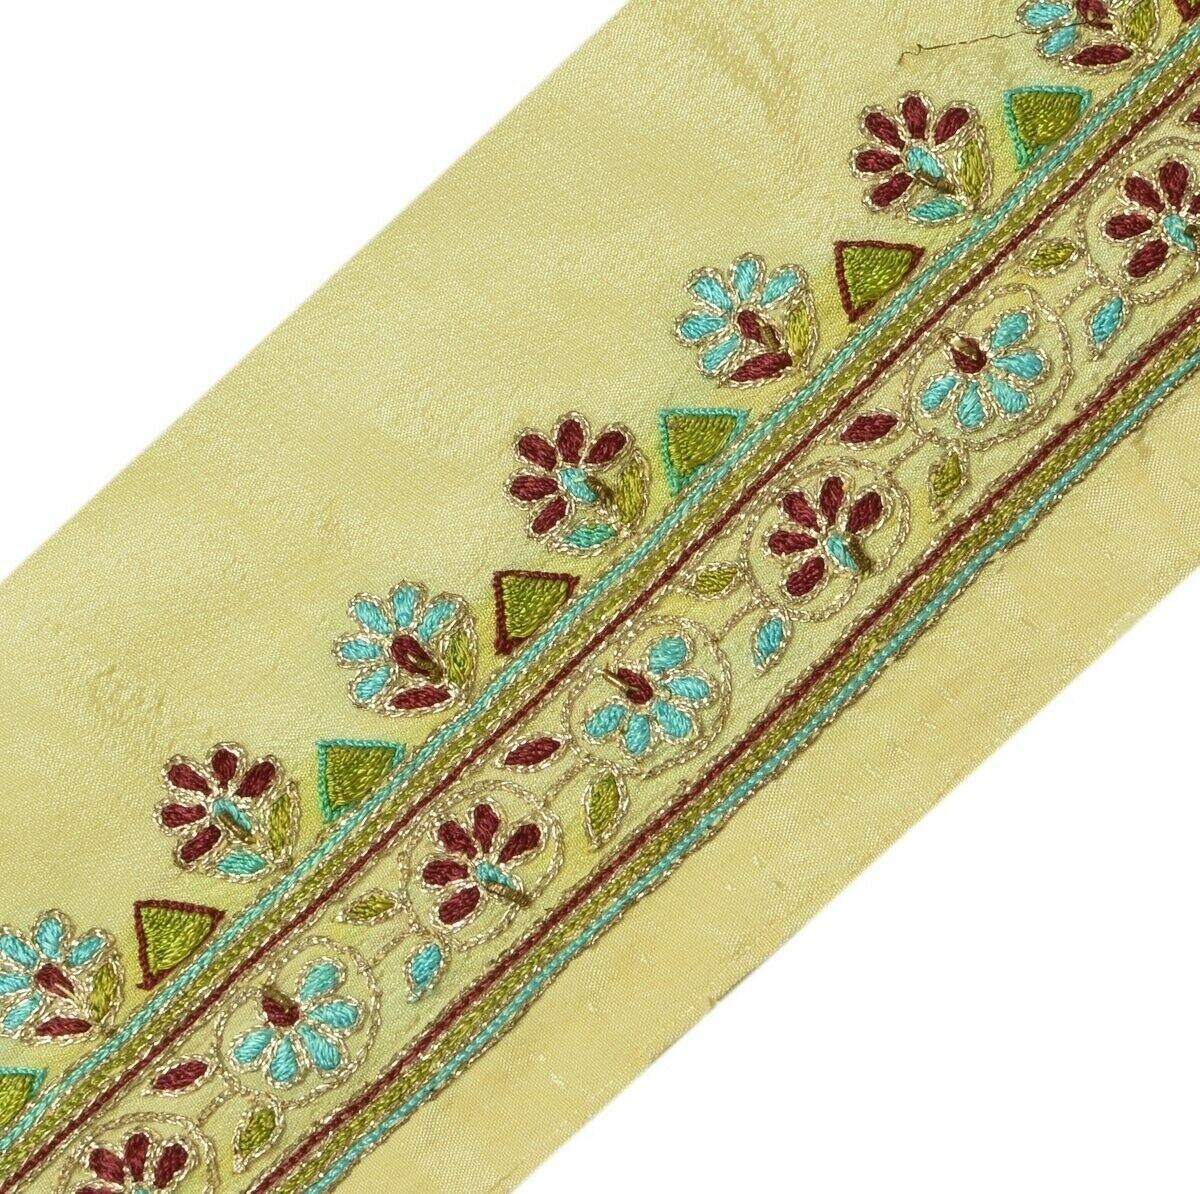 Vintage Sari Border Indian Craft Trim Embroidered Floral Cream Ribbon Lace